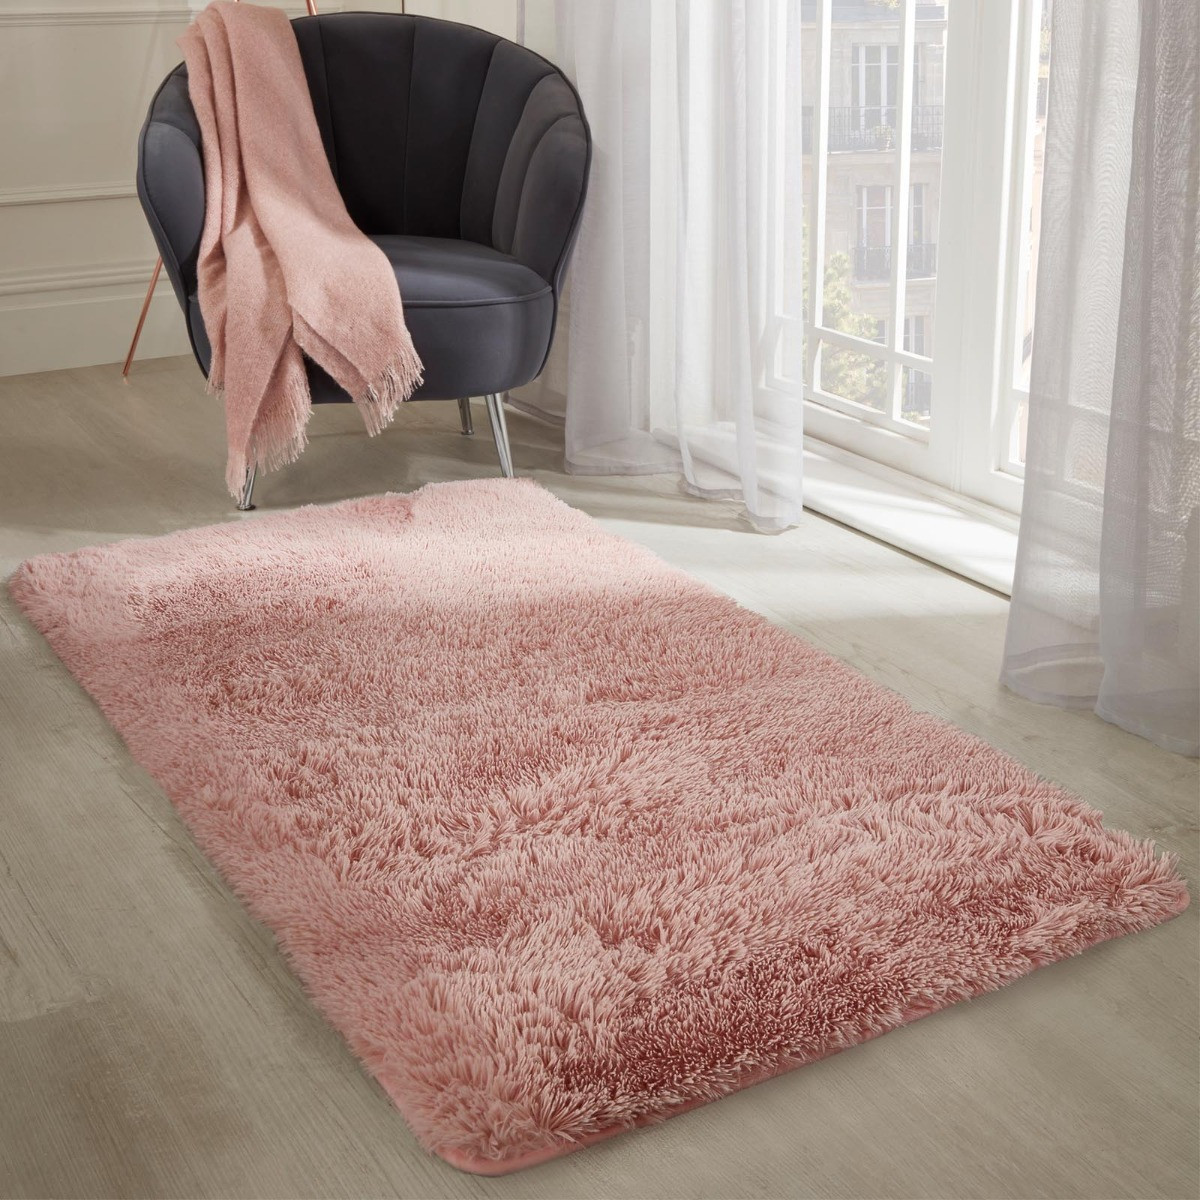 Sienna Soft Fluffy Rug Anti-Slip Plain Shaggy Floor Mat, Blush - 160 x 230cm>